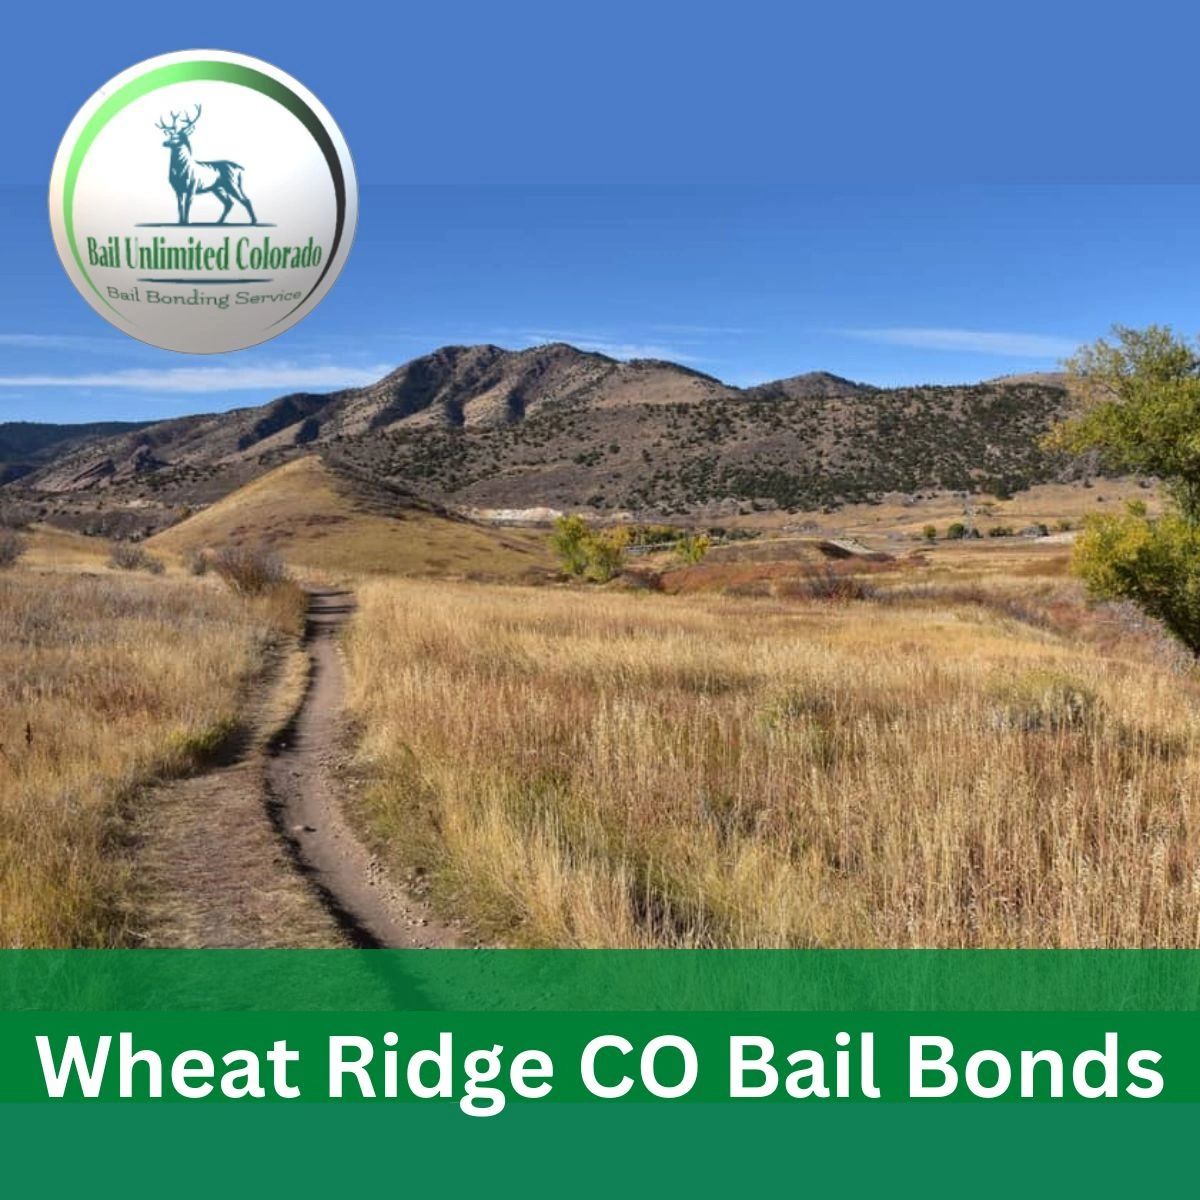 Wheat Ridge CO Bail Bonds IMAGE County Road in Wheat Ridge City Limits LOGO Bail Unlimited Colorado